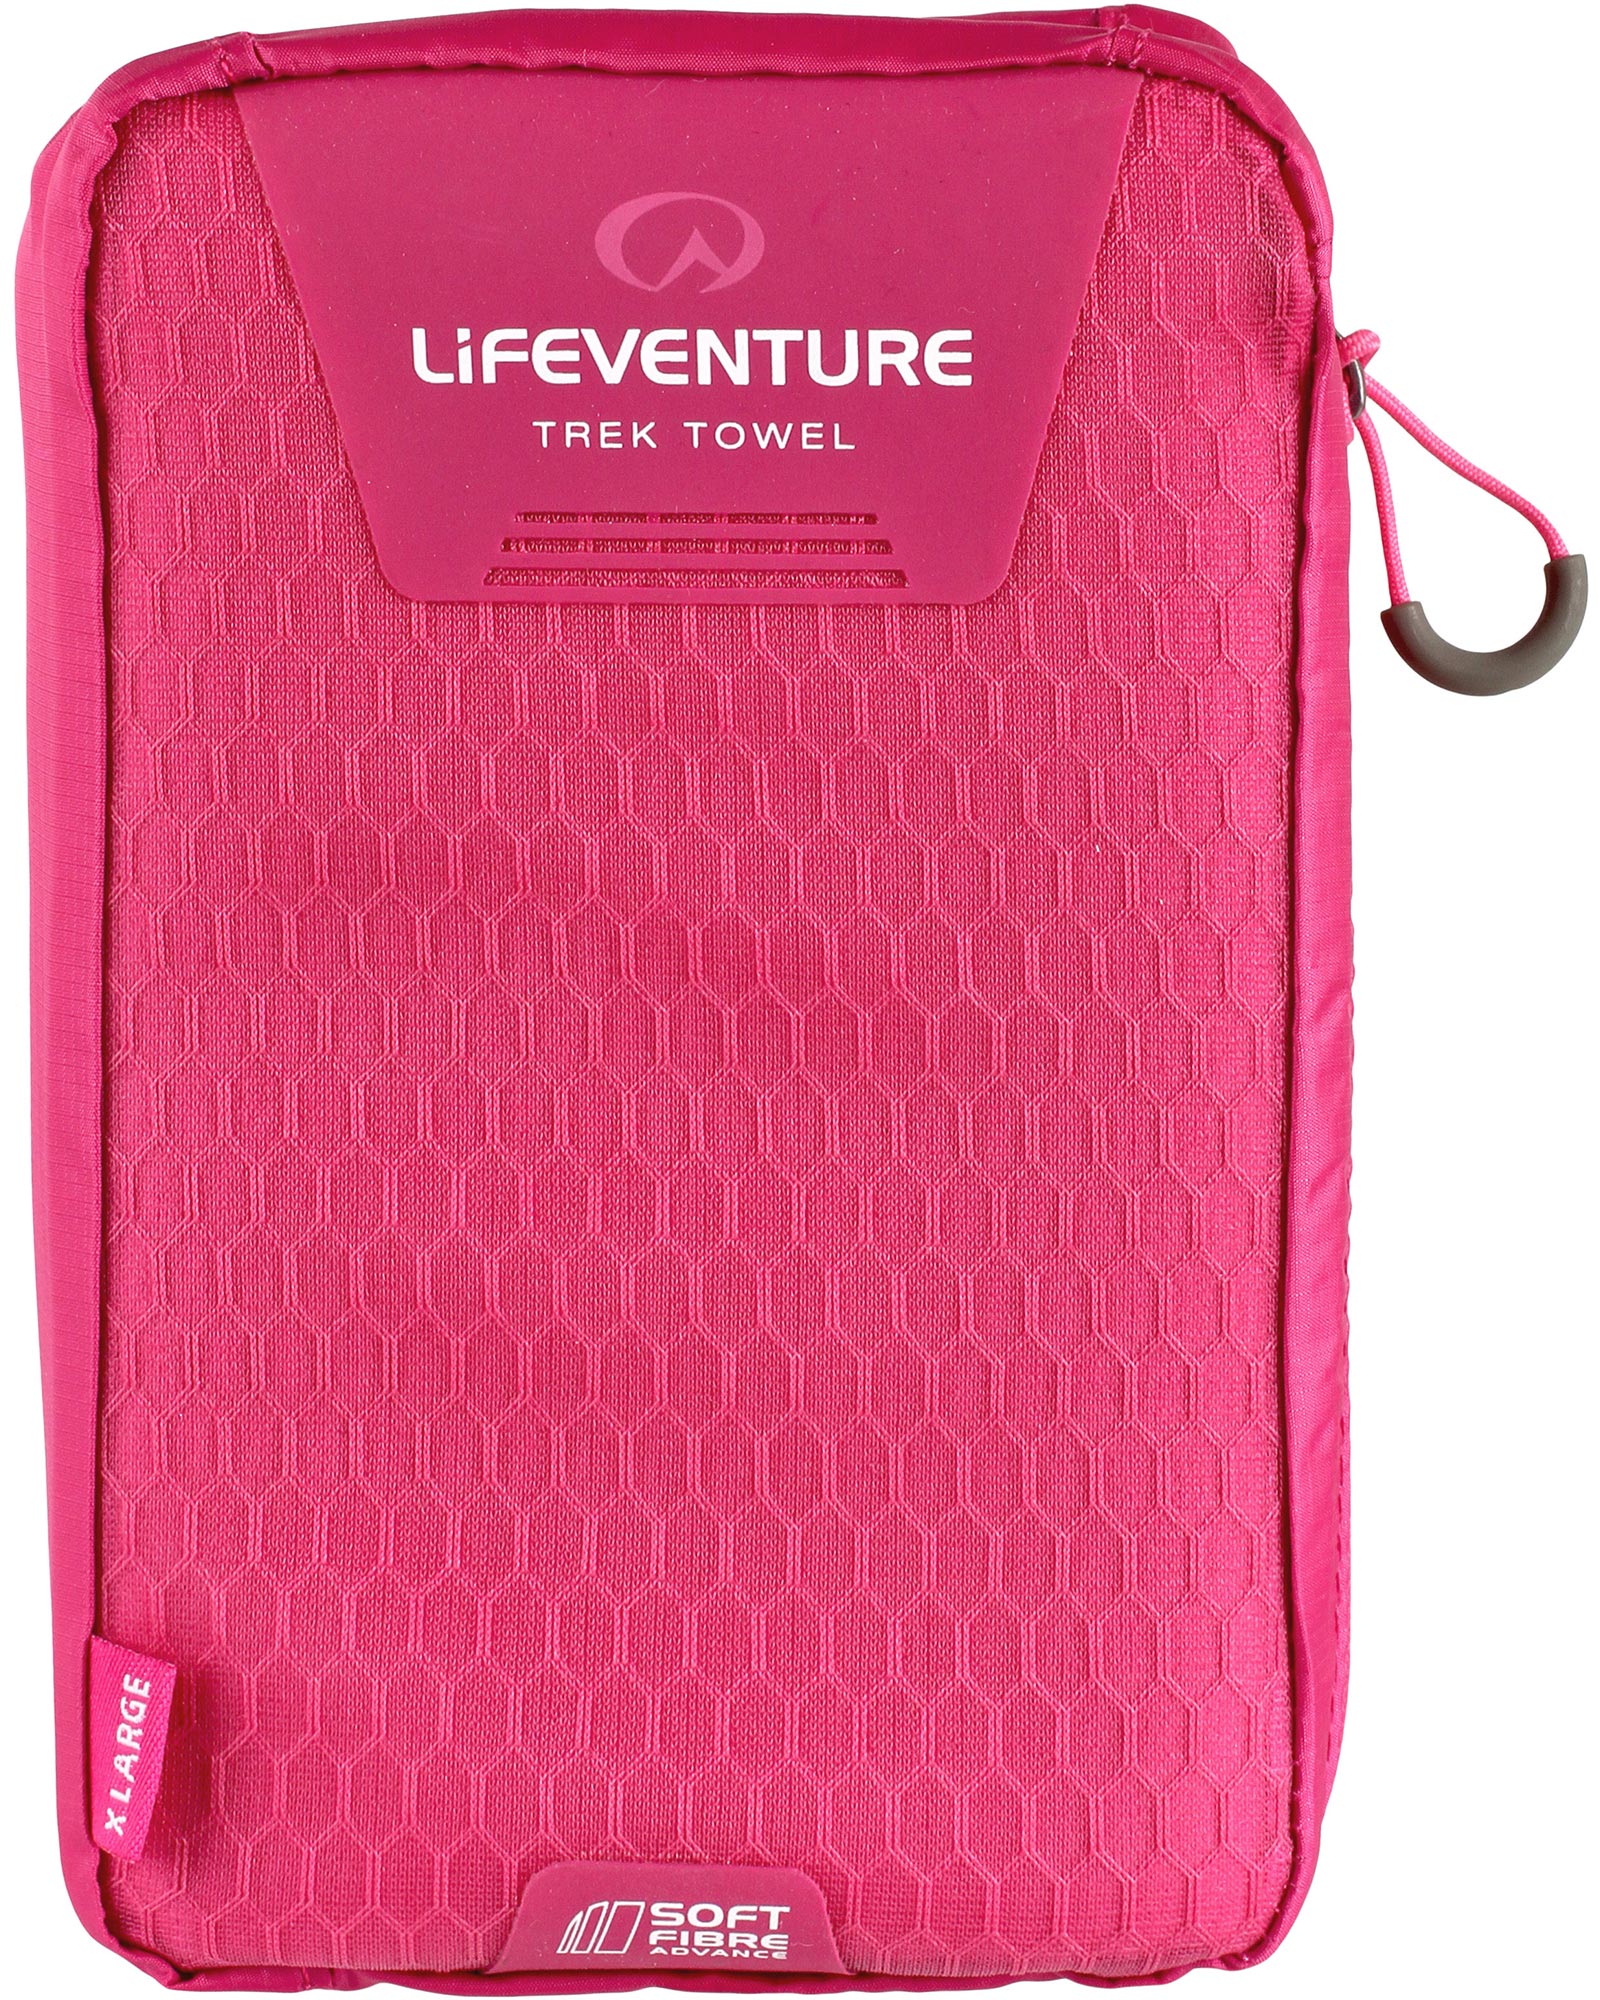 Lifeventure Soft Fibre Trek Towel - X Large